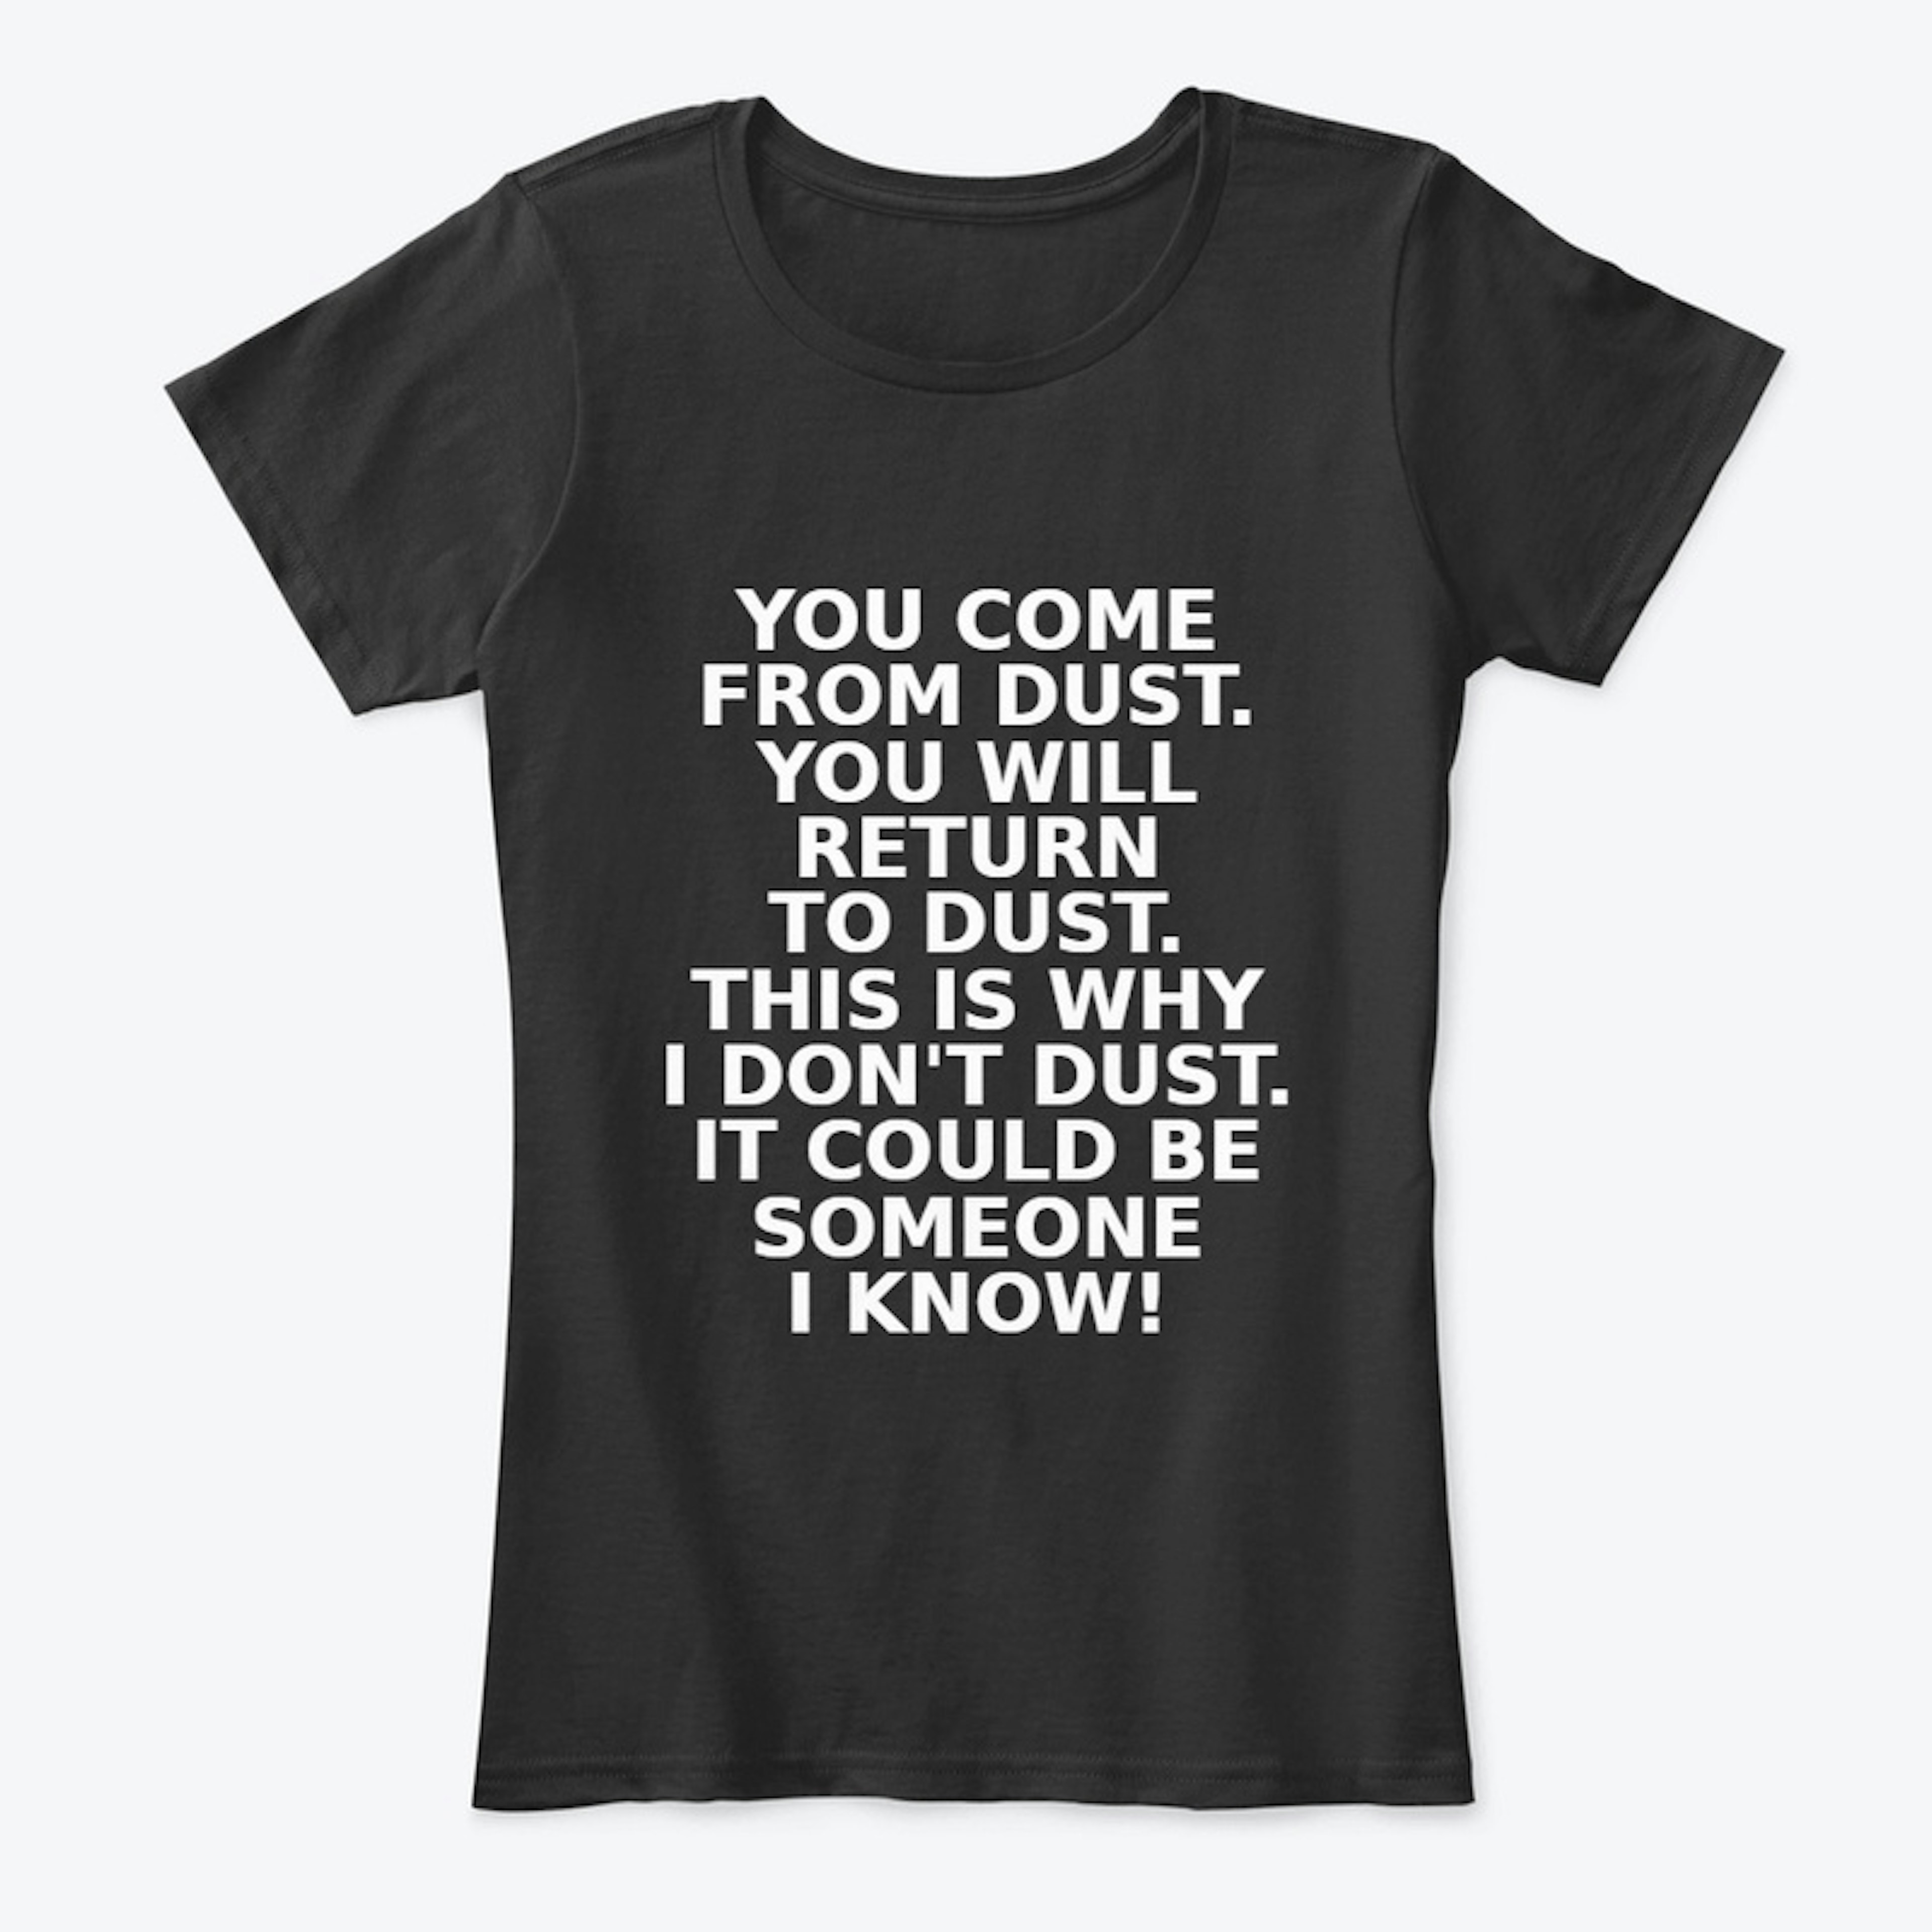 I Don't Dust Shirt